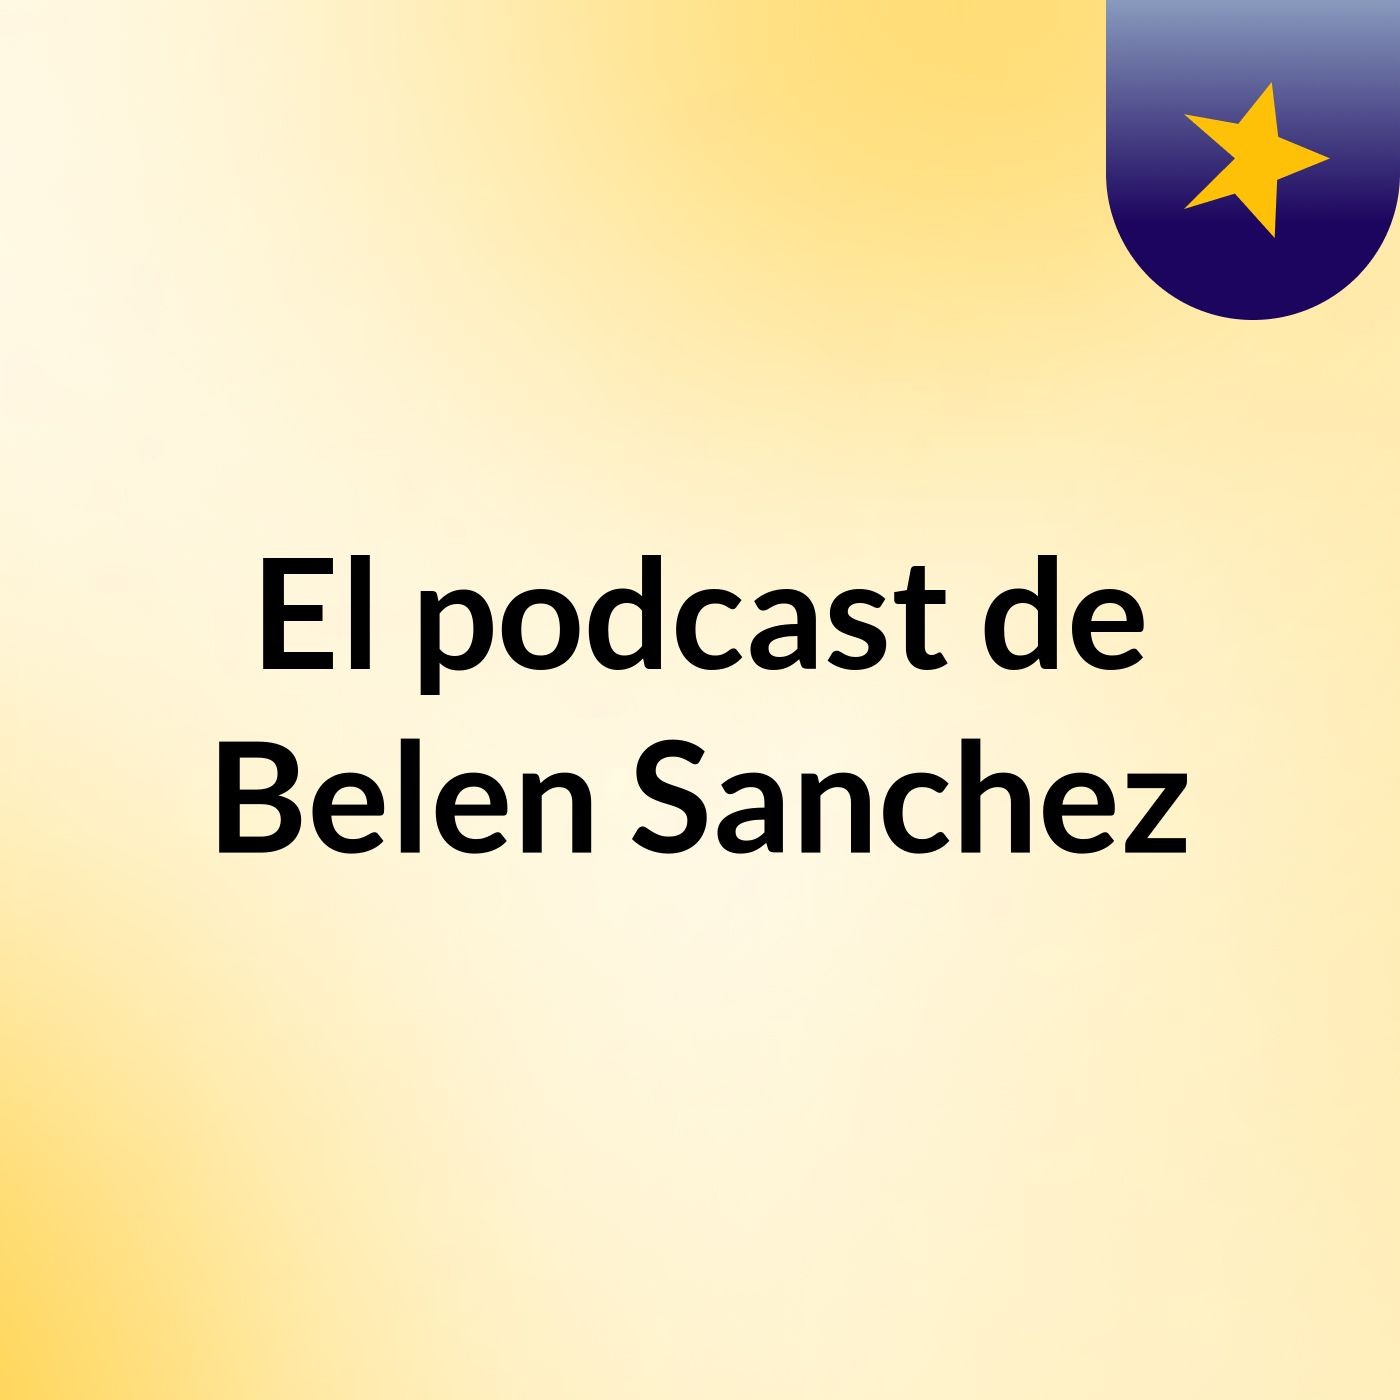 El podcast de Belen Sanchez